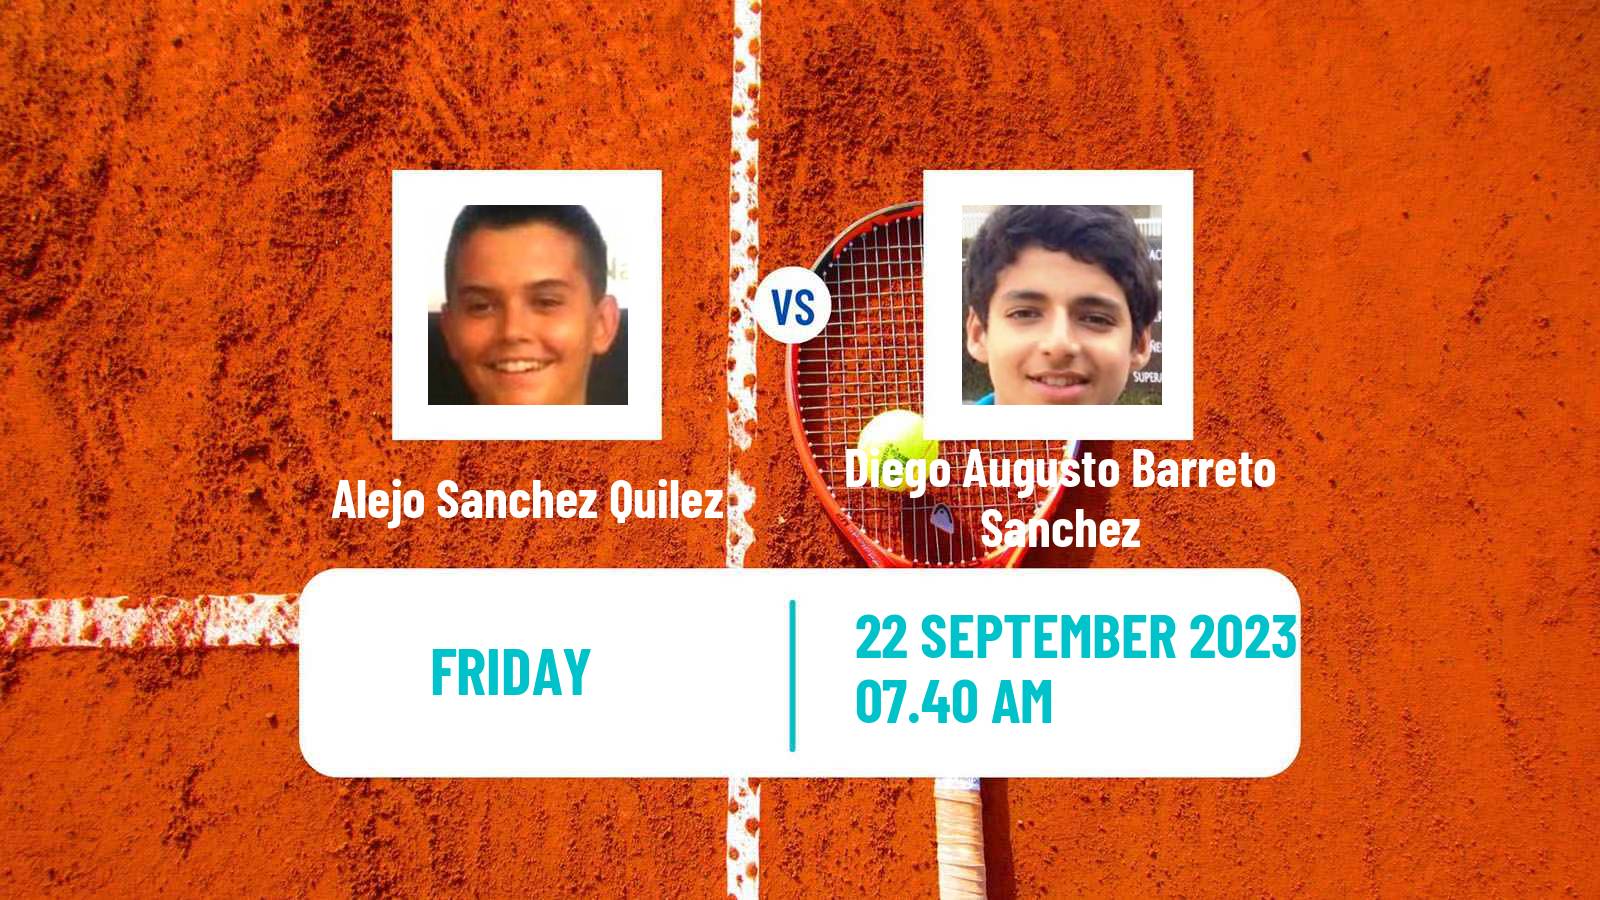 Tennis ITF M15 Melilla Men Alejo Sanchez Quilez - Diego Augusto Barreto Sanchez